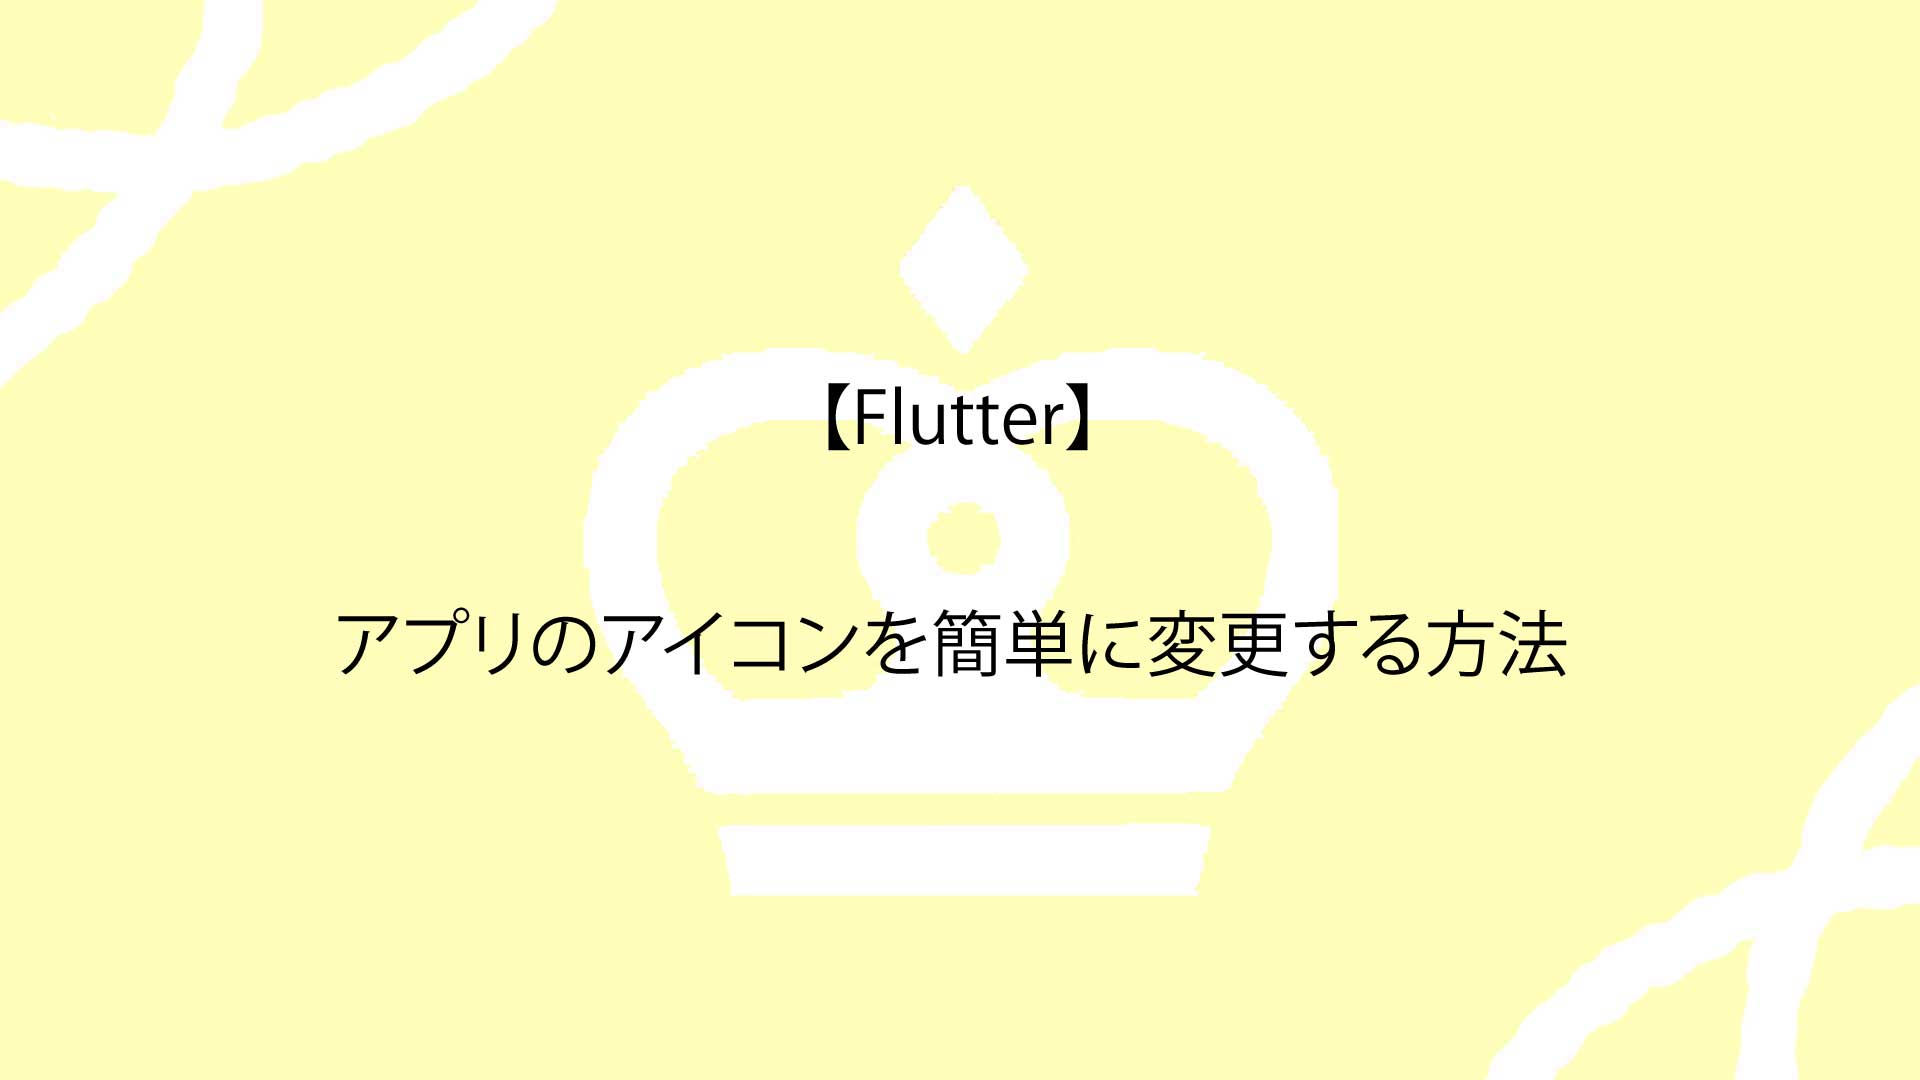 【Flutter】アプリのアイコンを簡単に変更する方法(flutter_launcher_icons)を解説